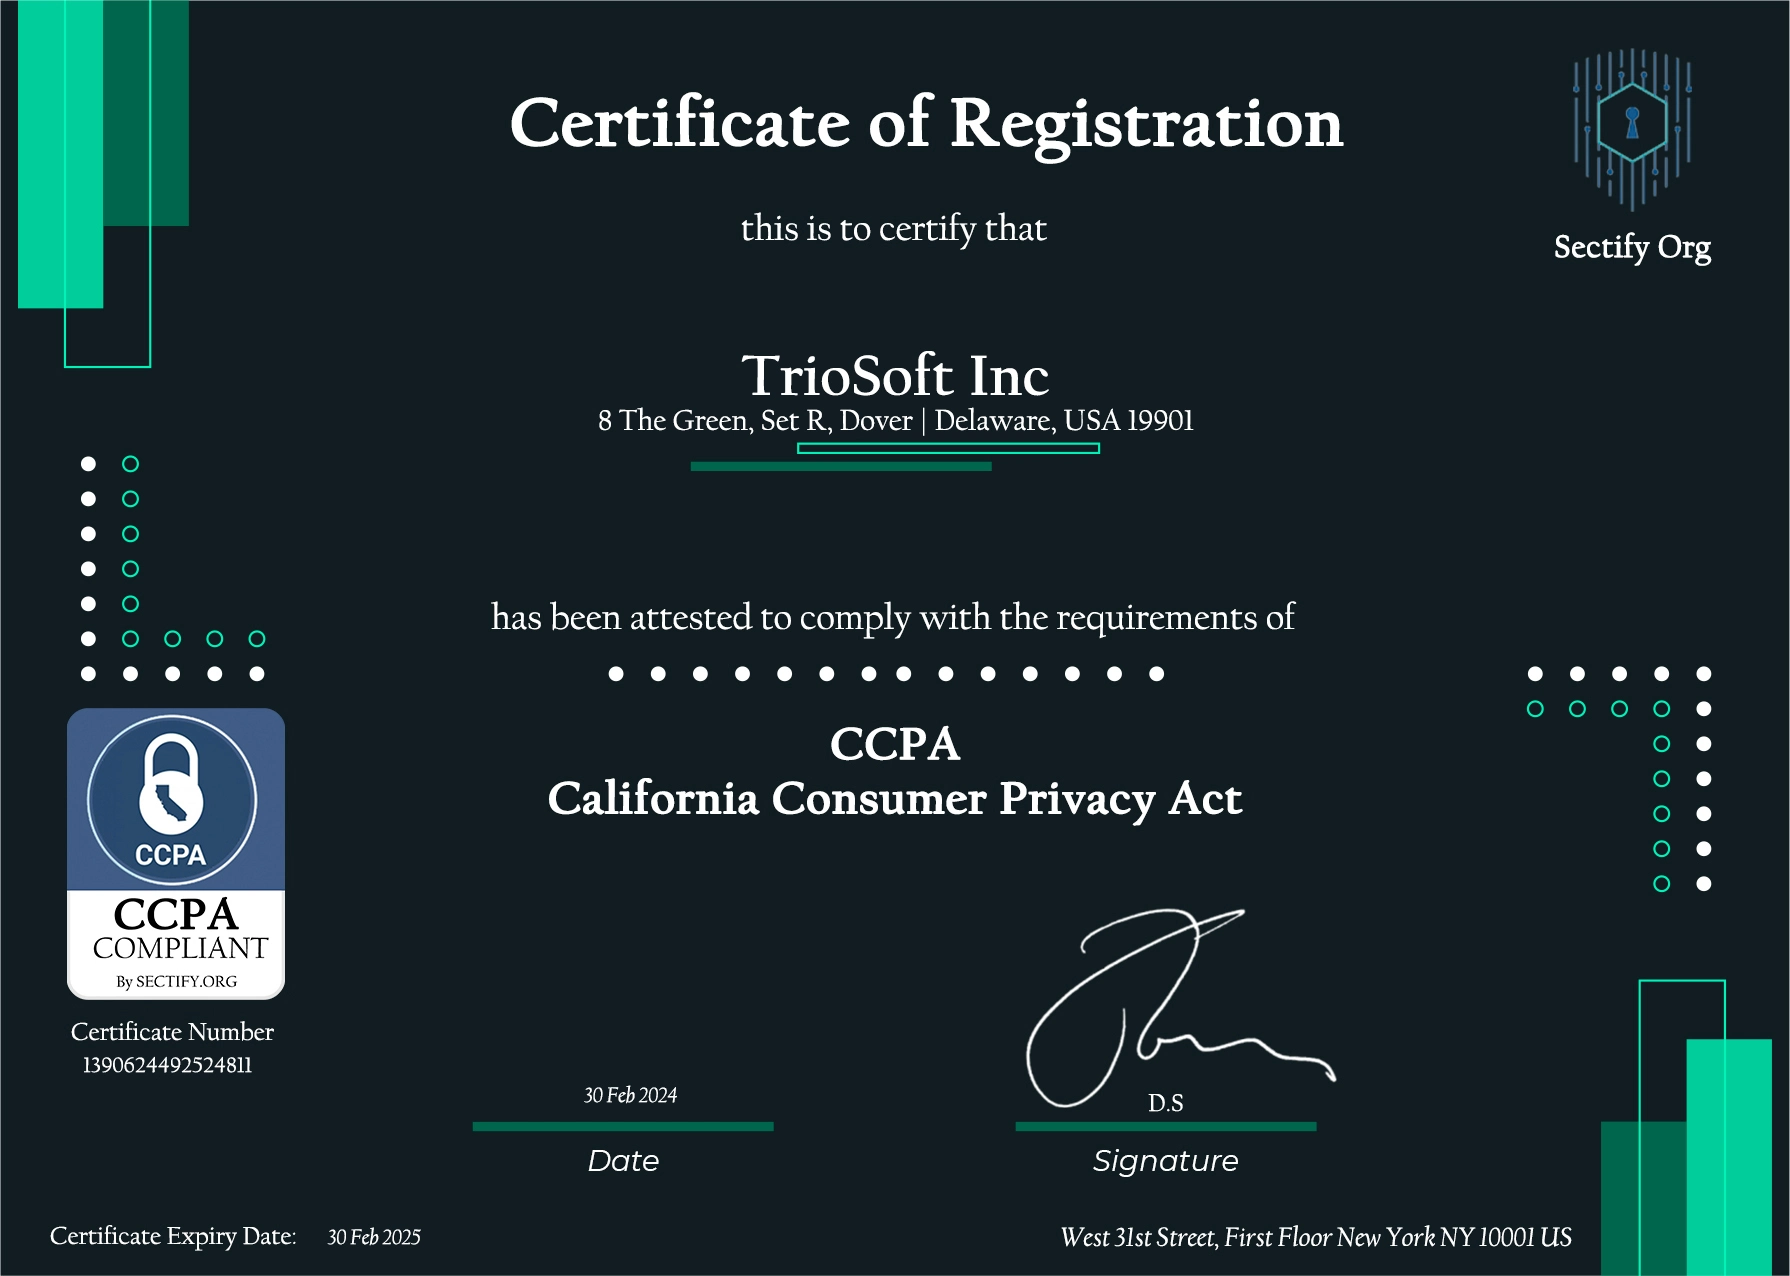 Trio's CCPA Certification